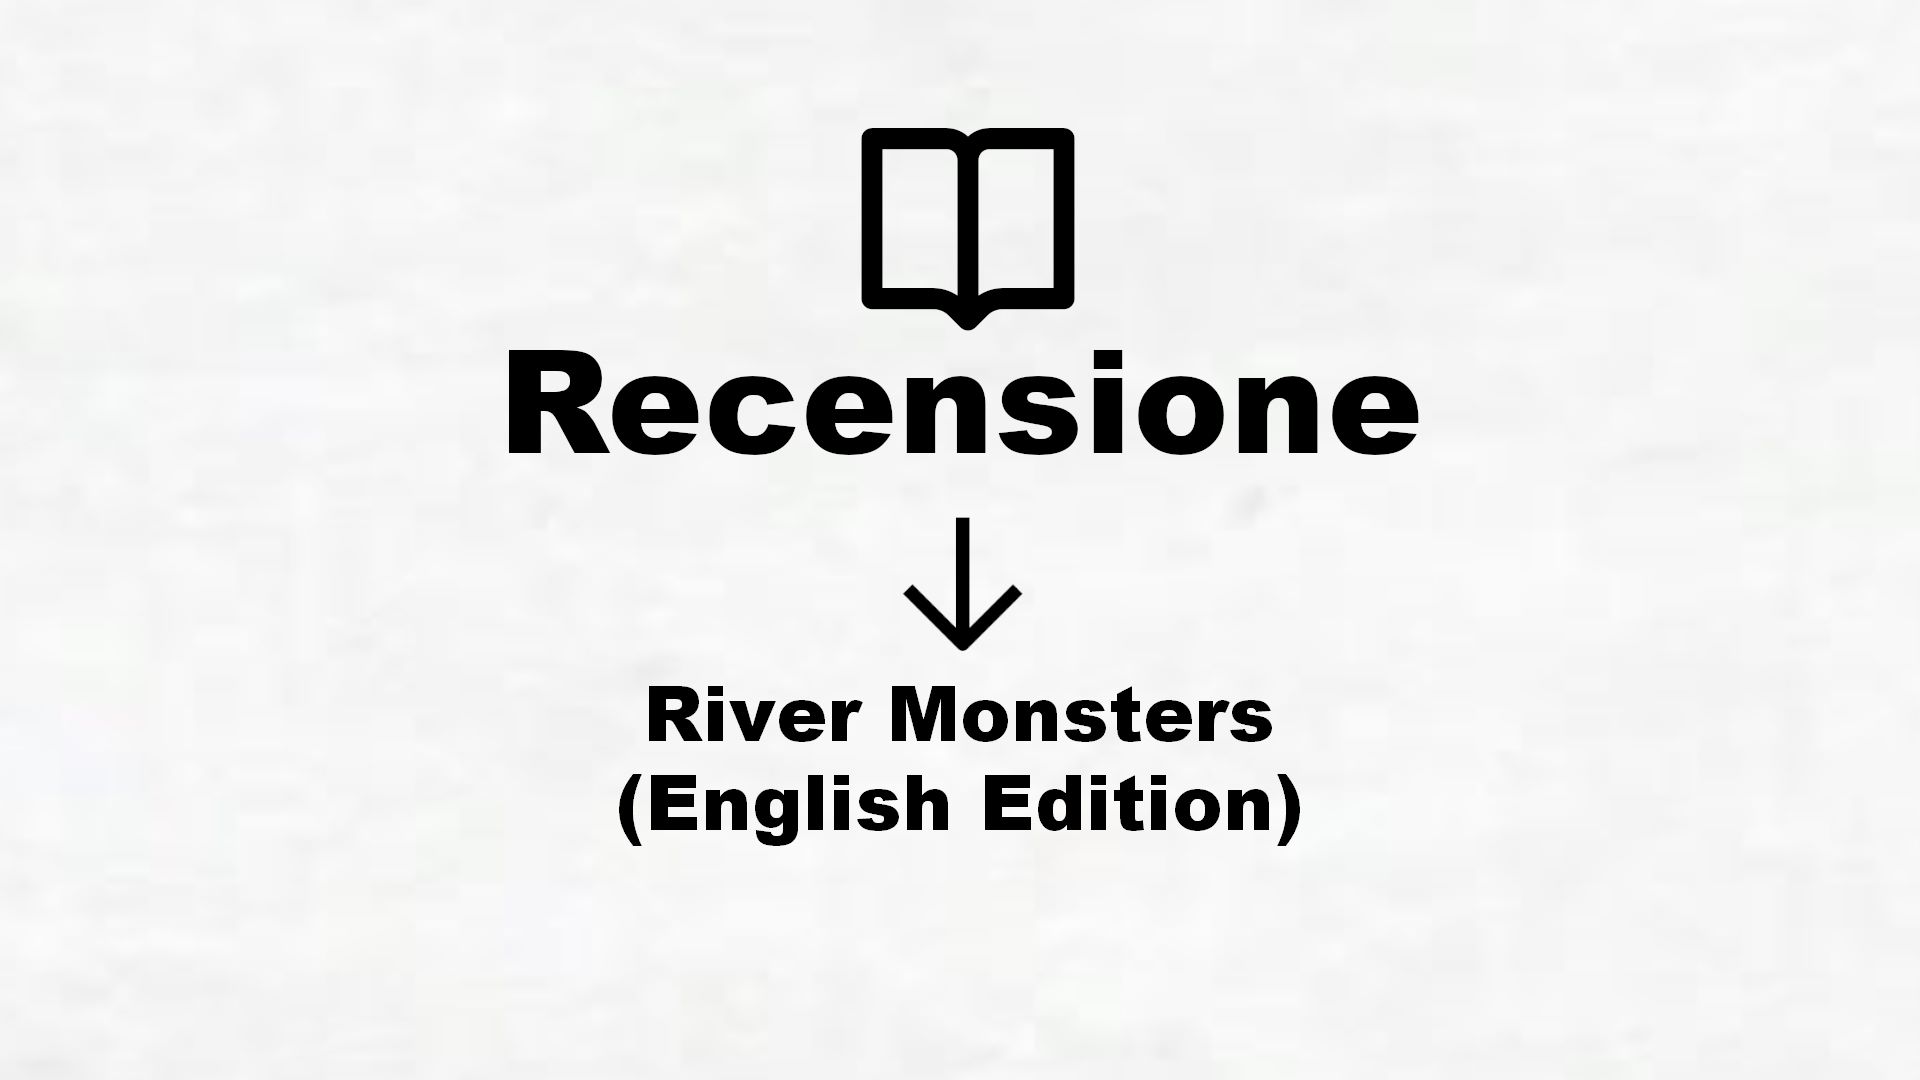 River Monsters (English Edition) – Recensione Libro